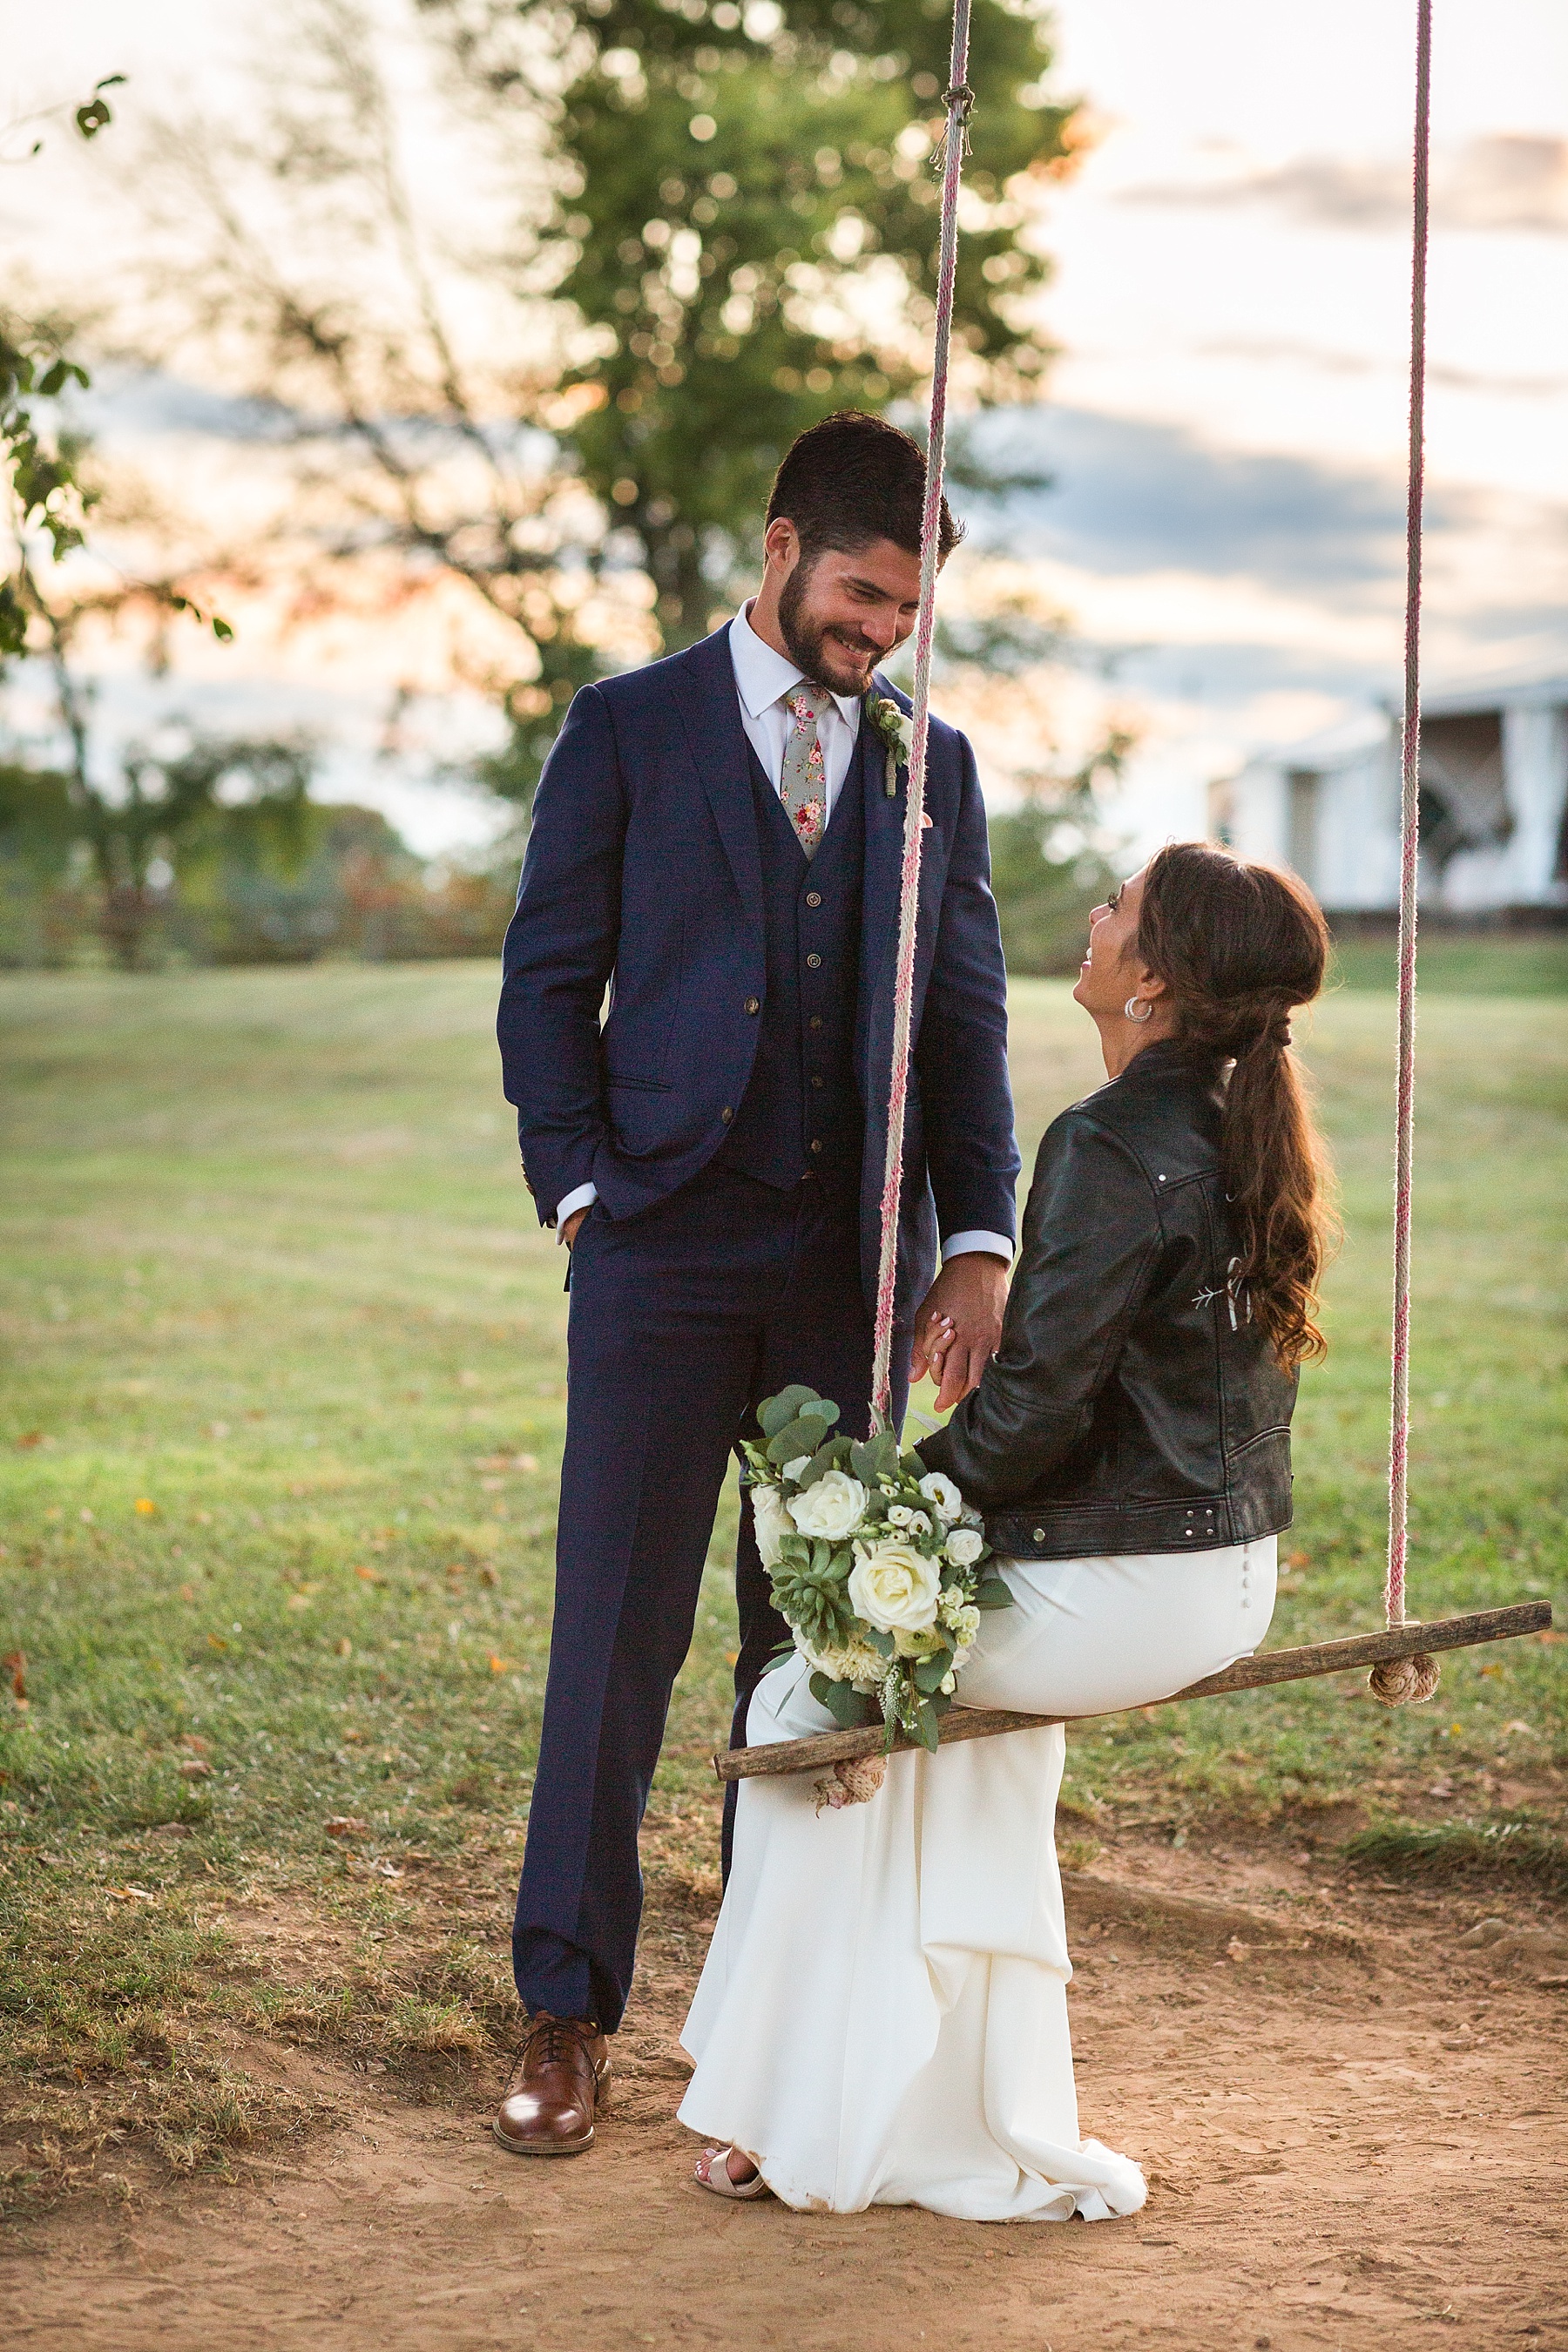 Alexandra Mandato Photography photographs bride and groom on swing